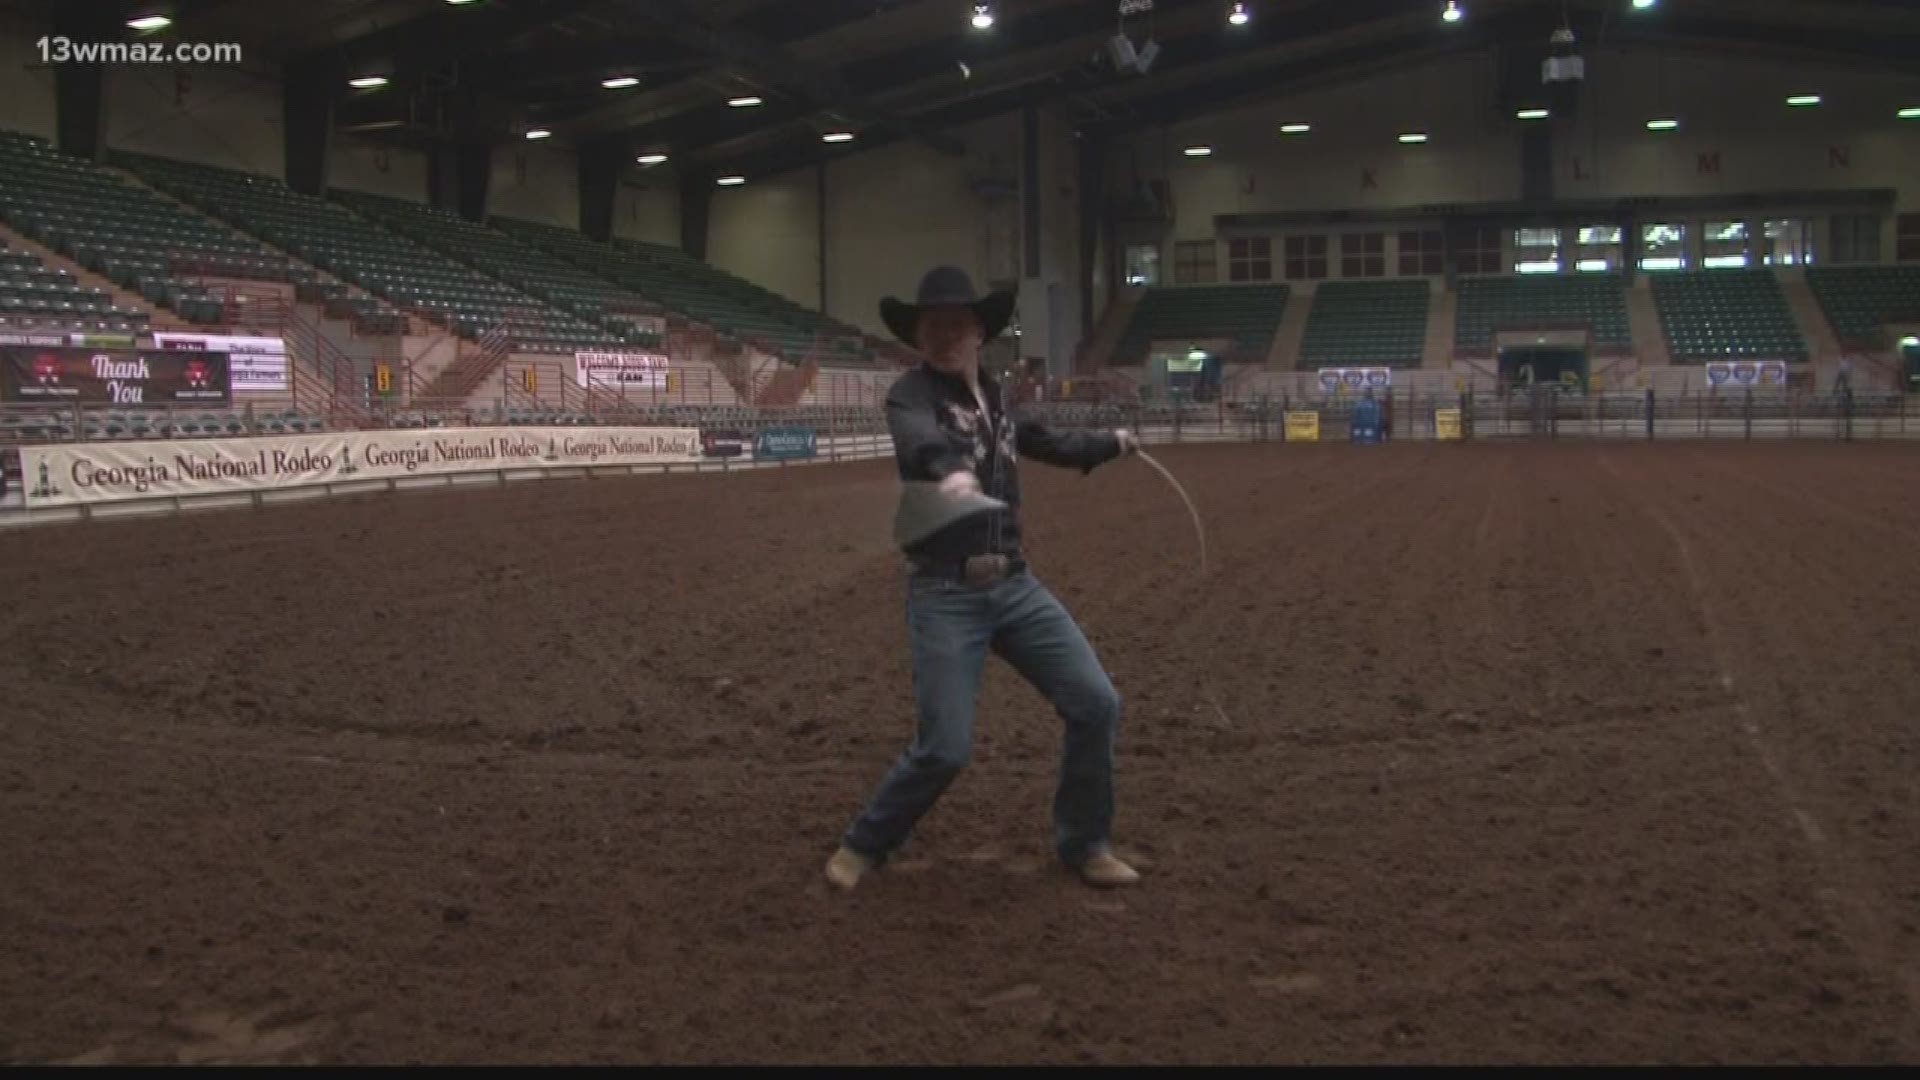 Gunslinging performer shows off skill ahead of Georgia National Rodeo